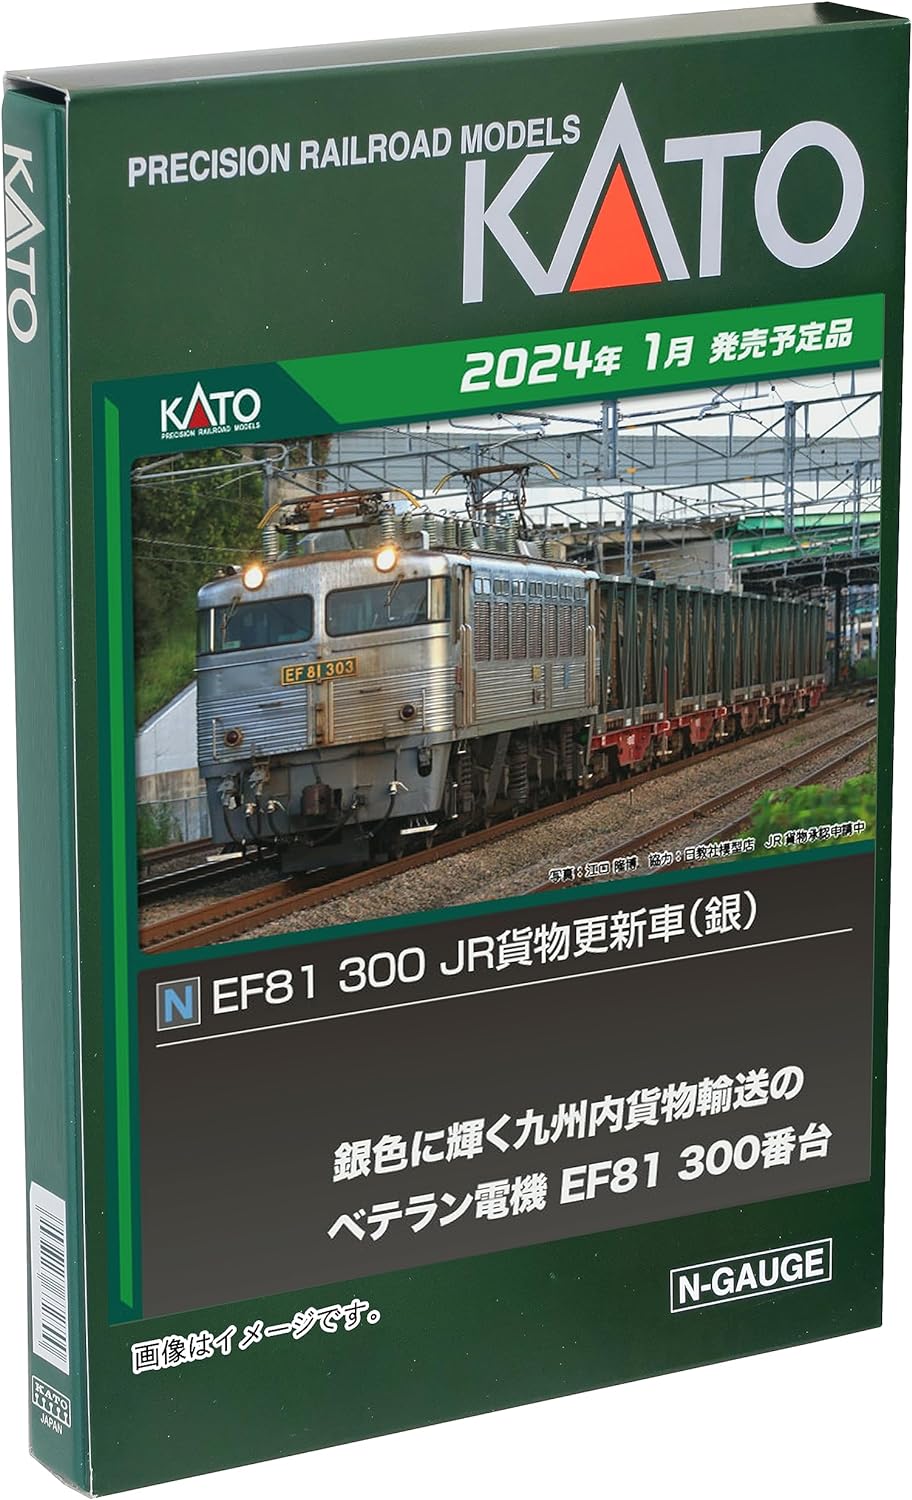 KATO N Gauge EF81 300 JR Cargo Update Car (Silver) 3067-3 Model Railway Electric Locomotive - BanzaiHobby